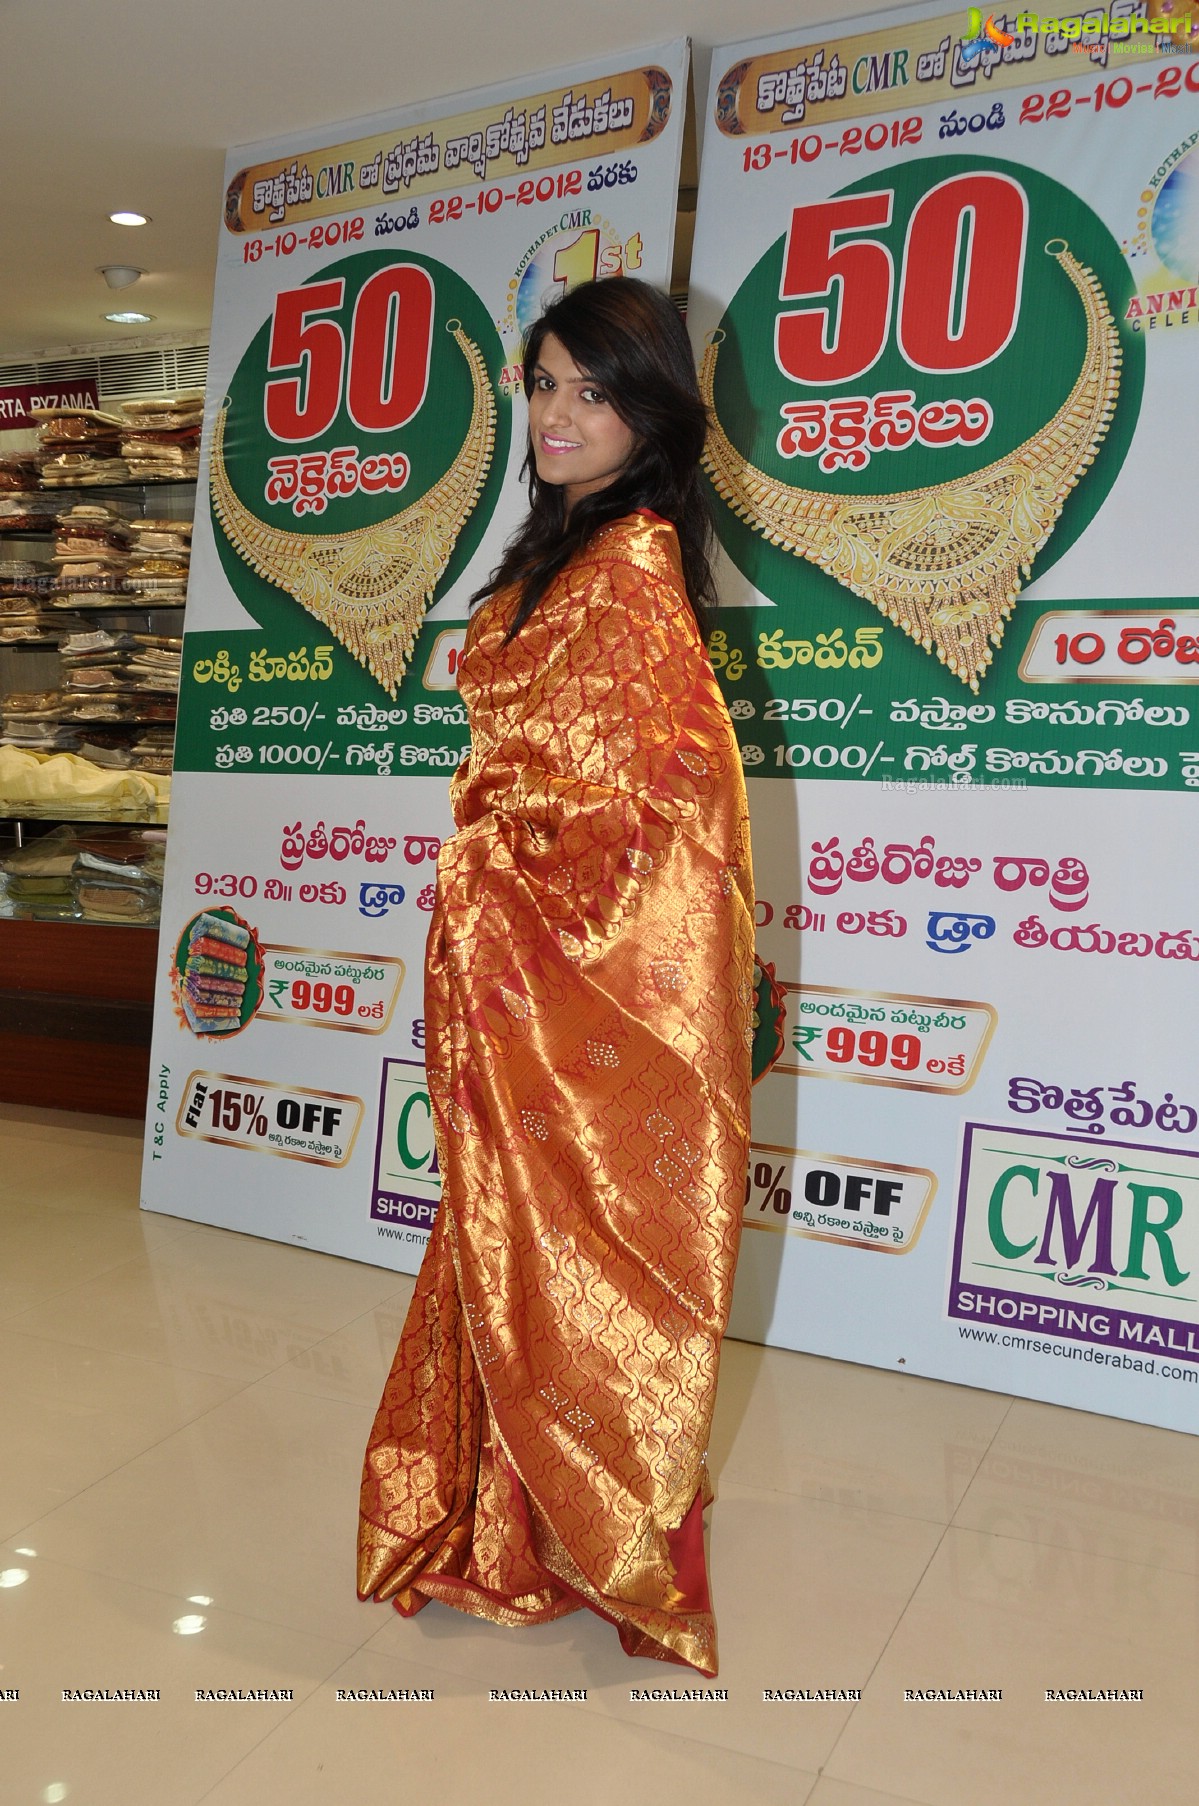 Kothapet CMR First Anniversary Celebrations